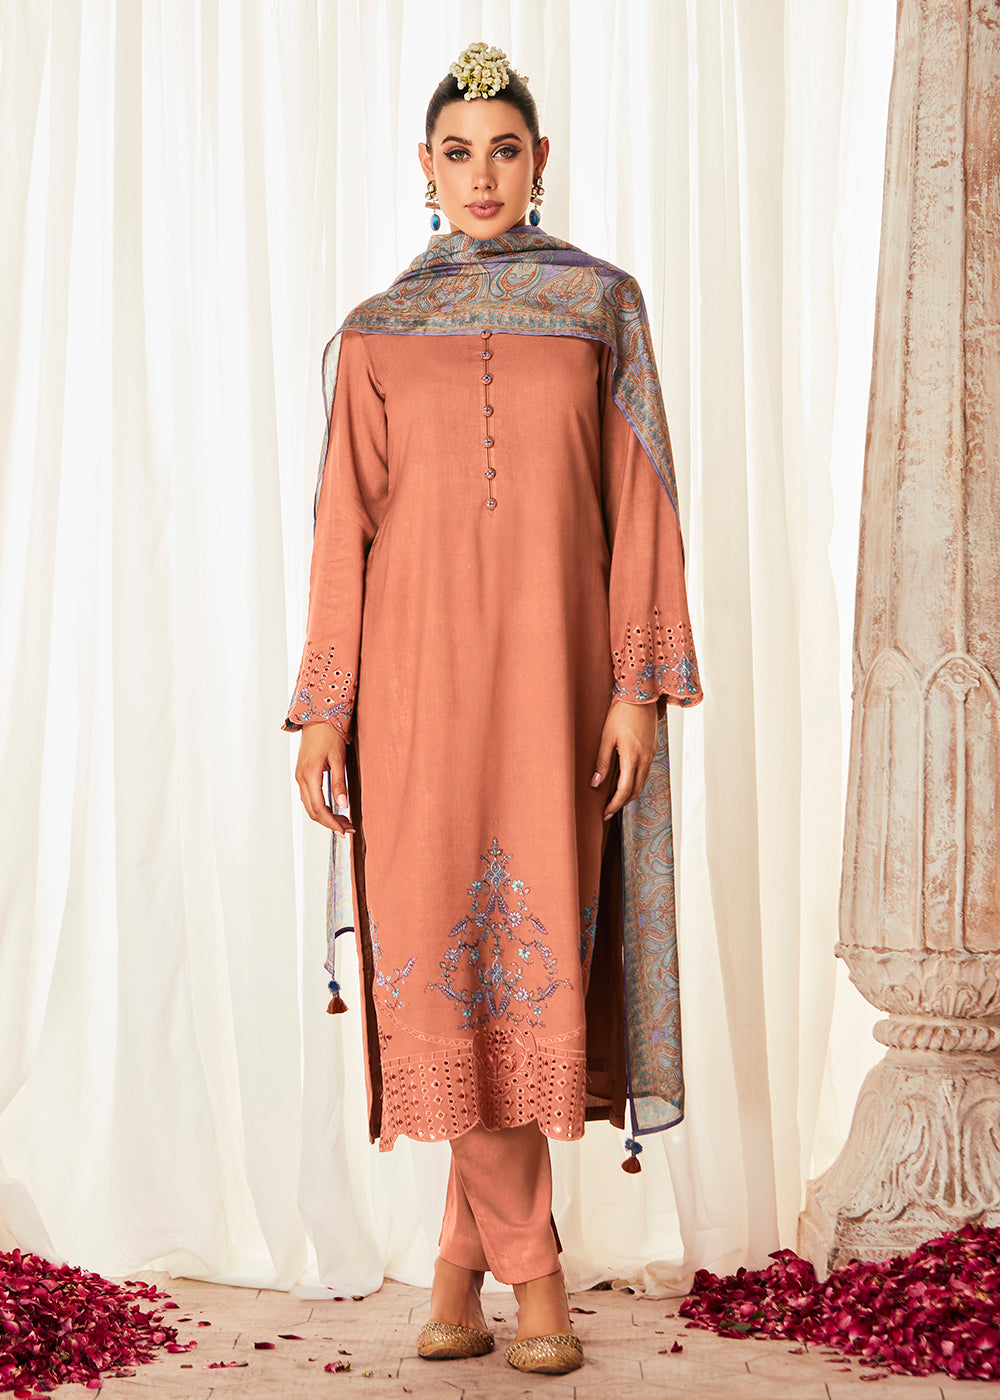 Buy Now Pleasing Orange Suzani Inspired Embroidered Ethnic Salwar Suit Online in USA, UK, Canada, Germany, Australia & Worldwide at Empress Clothing. 